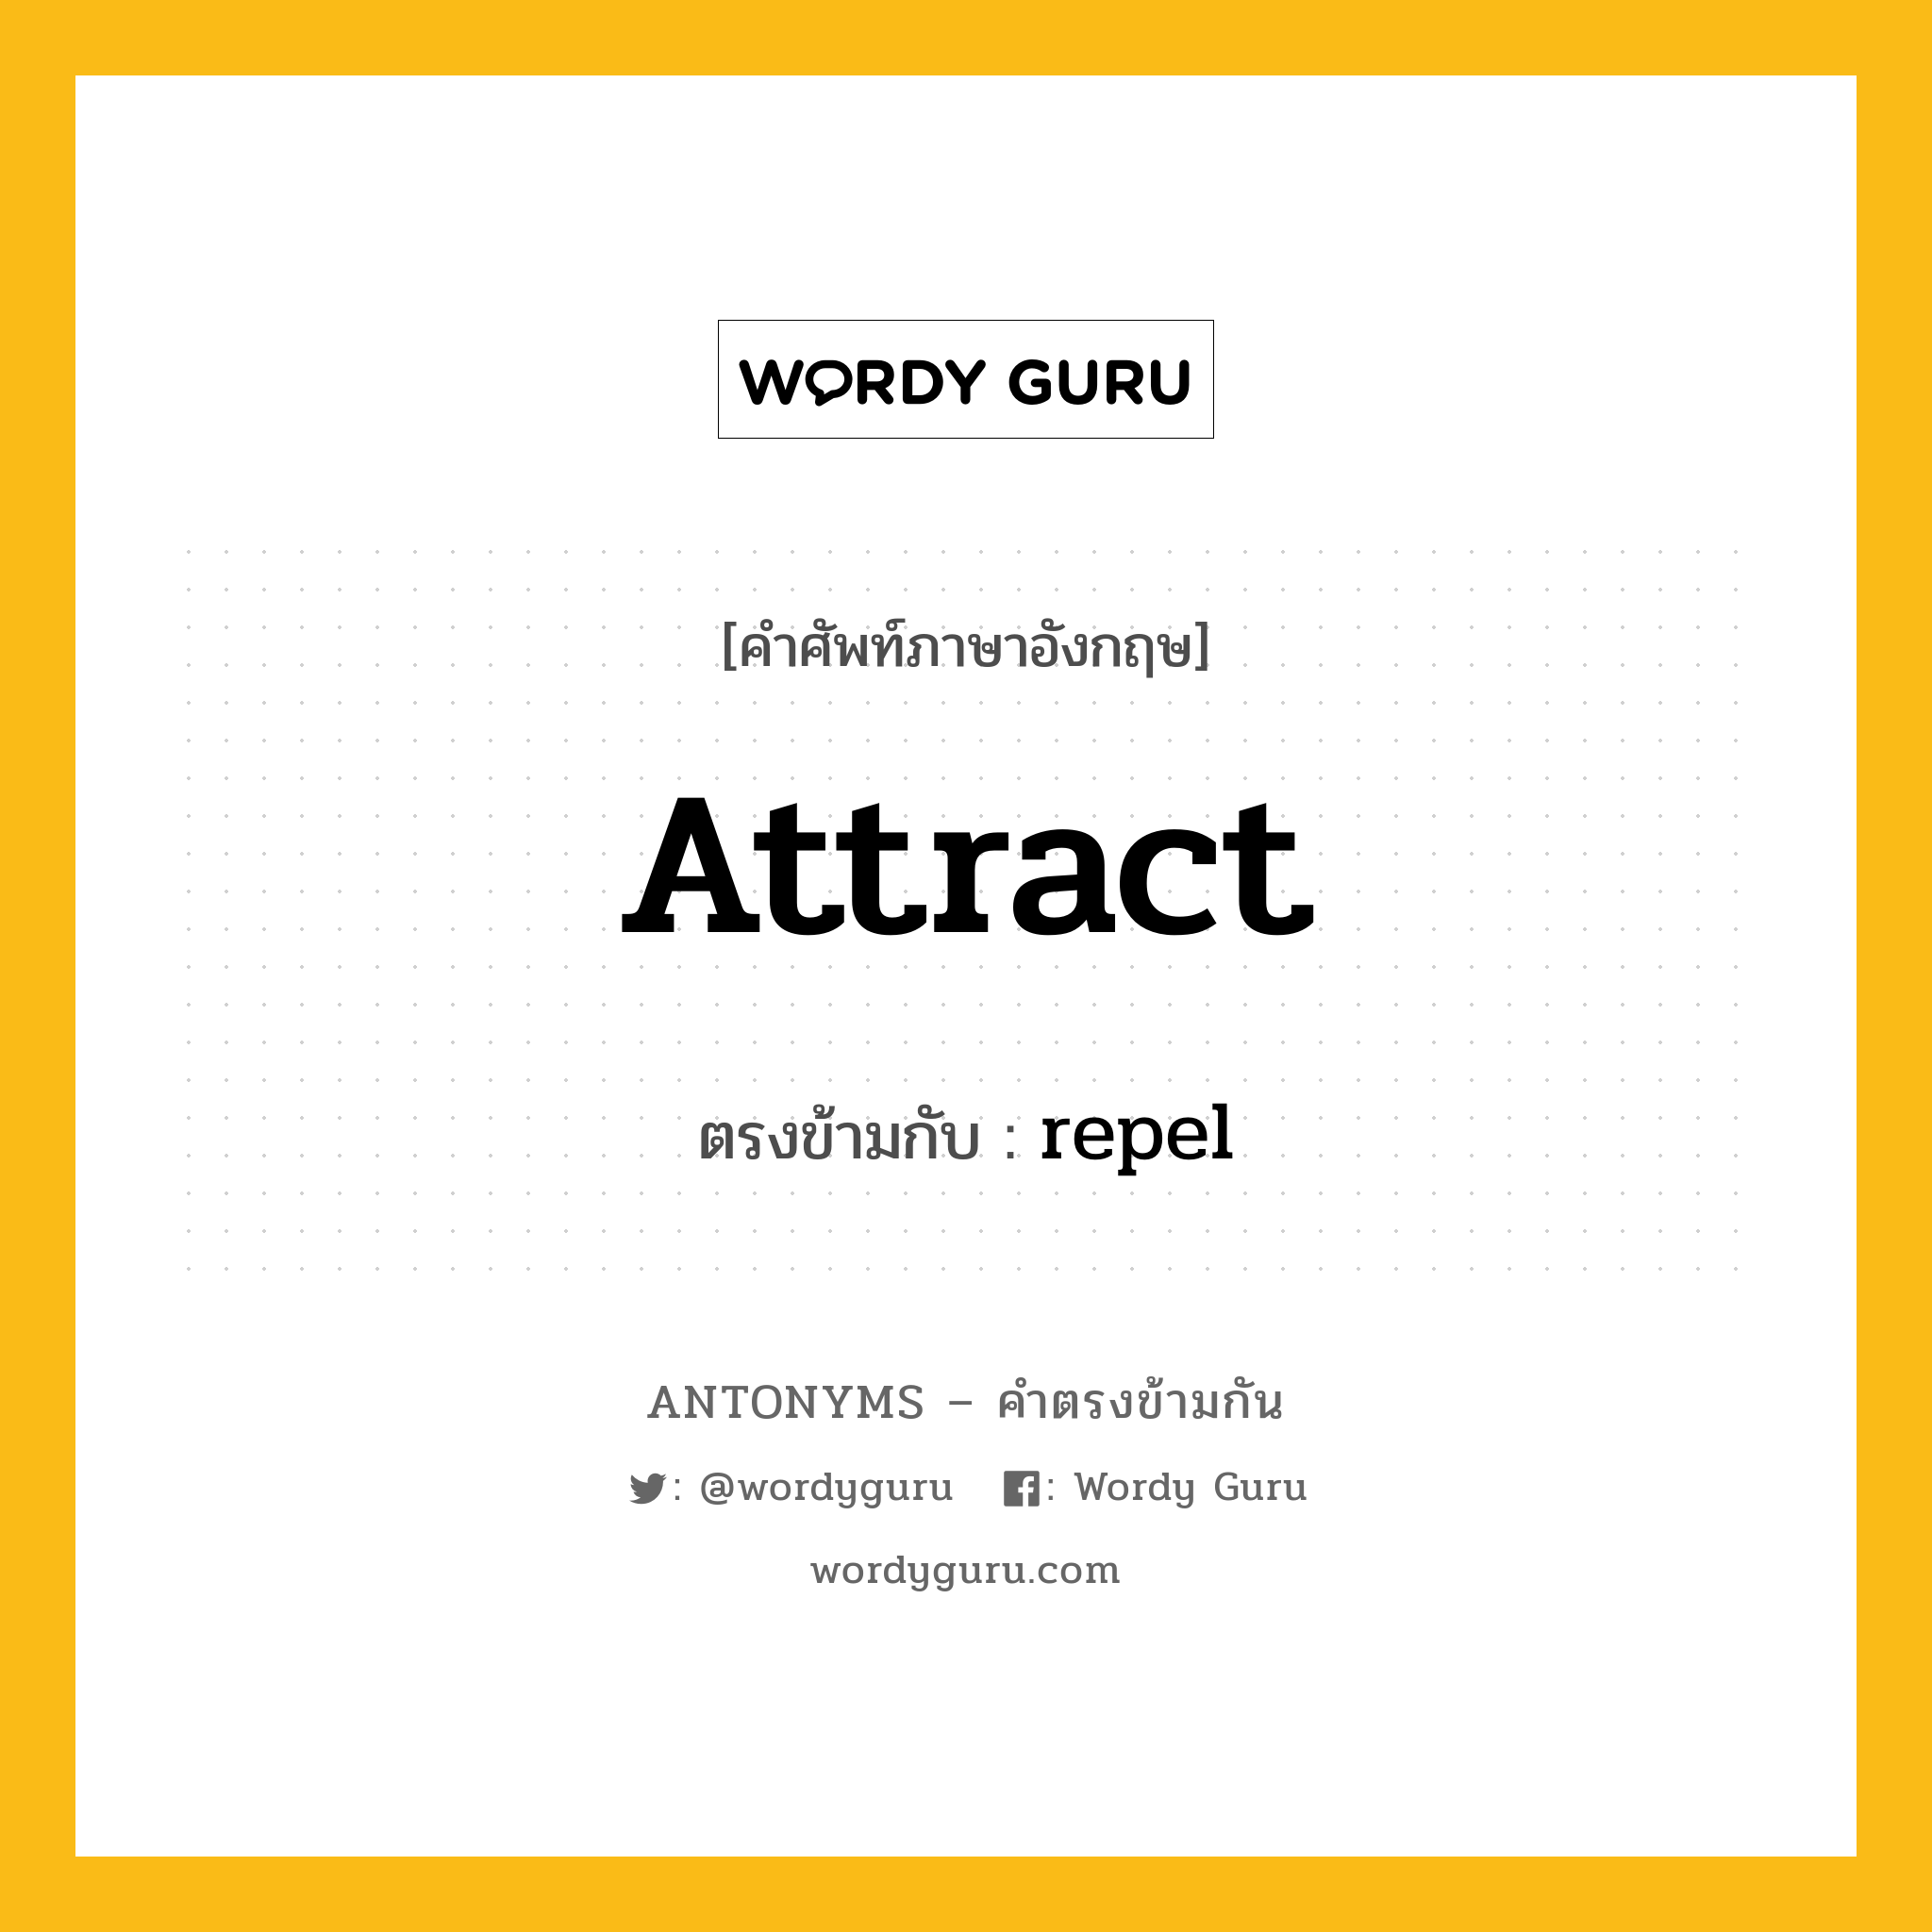 attract เป็นคำตรงข้ามกับคำไหนบ้าง?, คำศัพท์ภาษาอังกฤษ attract ตรงข้ามกับ repel หมวด repel